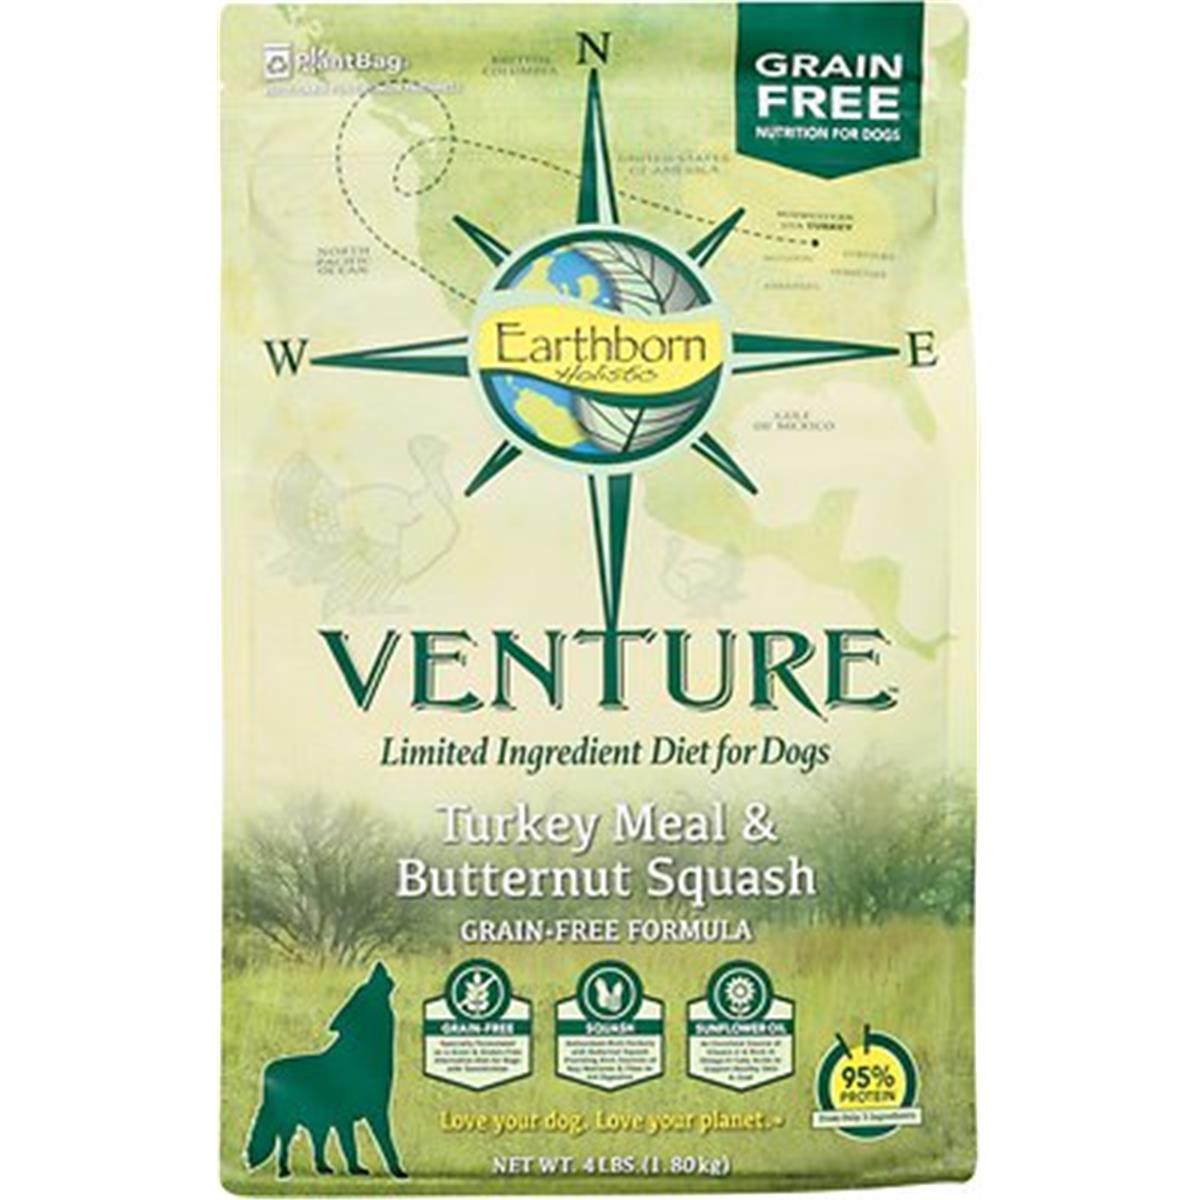 Pf57031 Venture Turkey Meal & Butternut Squash Grain-free Dry Dog Food - 12.5 Lbs